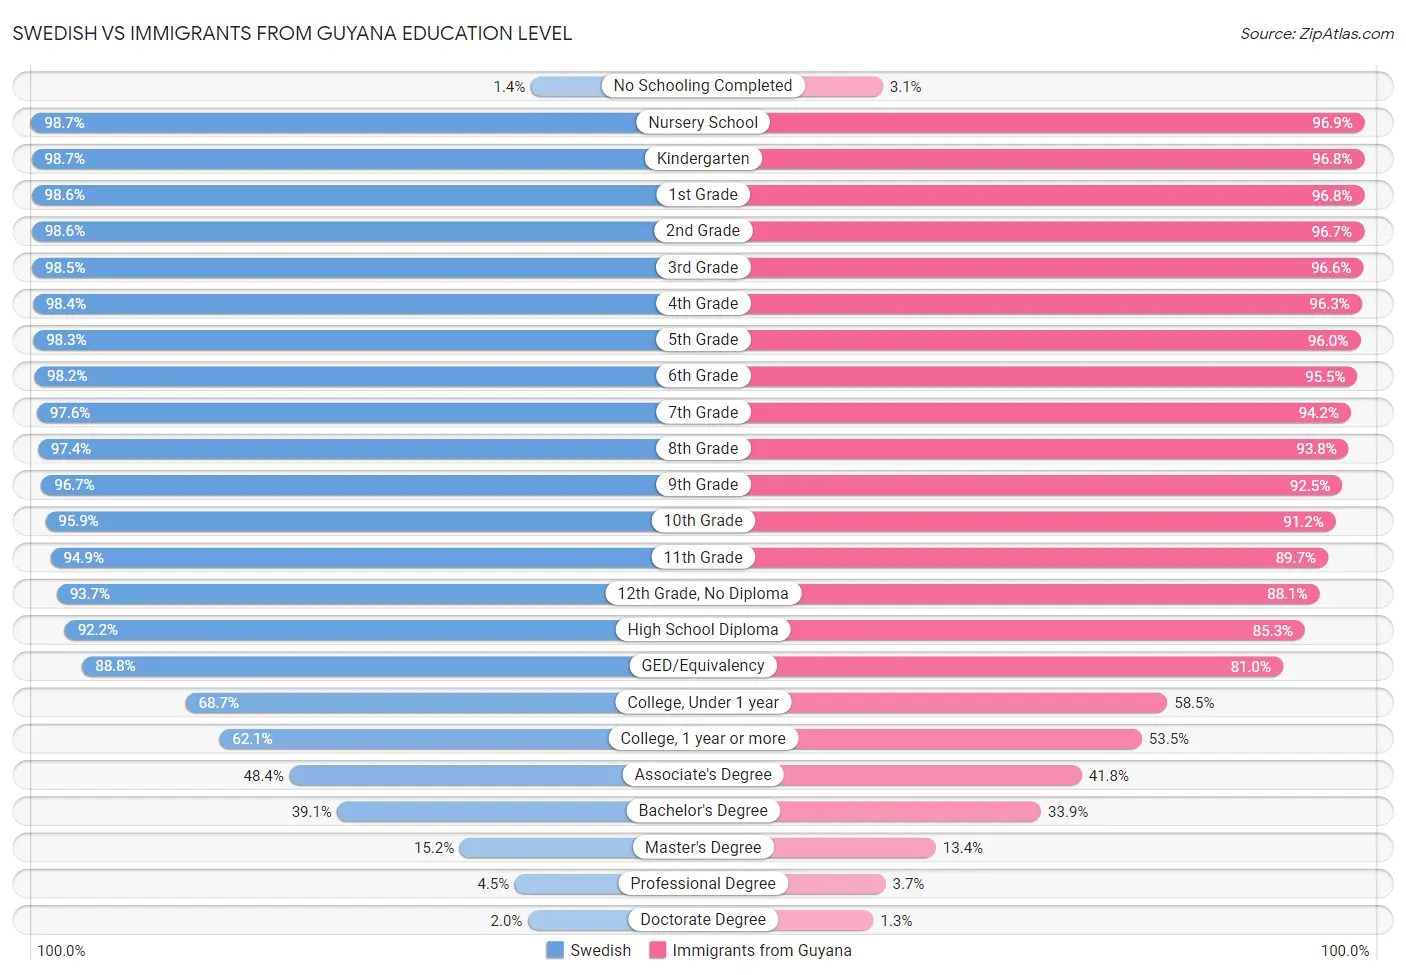 Swedish vs Immigrants from Guyana Education Level